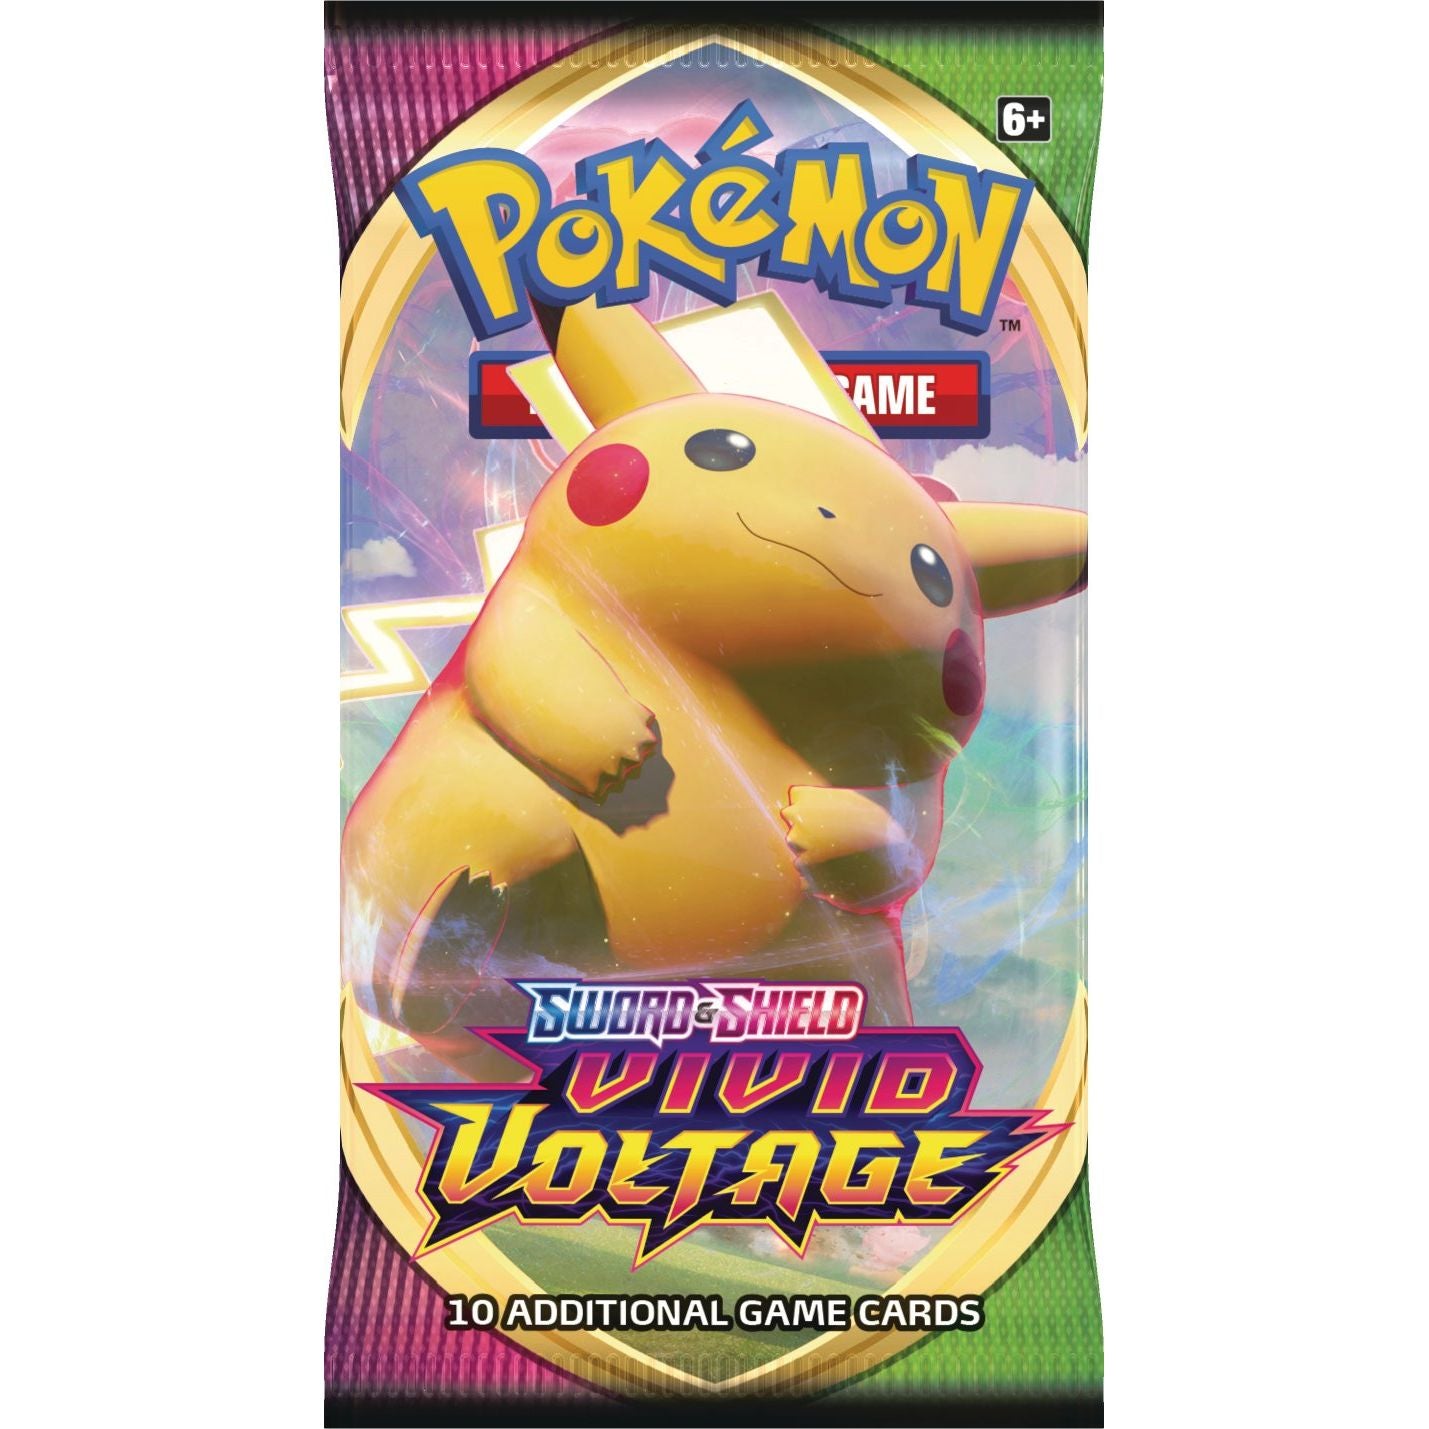  Pokémon Sword & Shield Vivid Voltage Booster Pack  Local Legends Cards & Collectibles